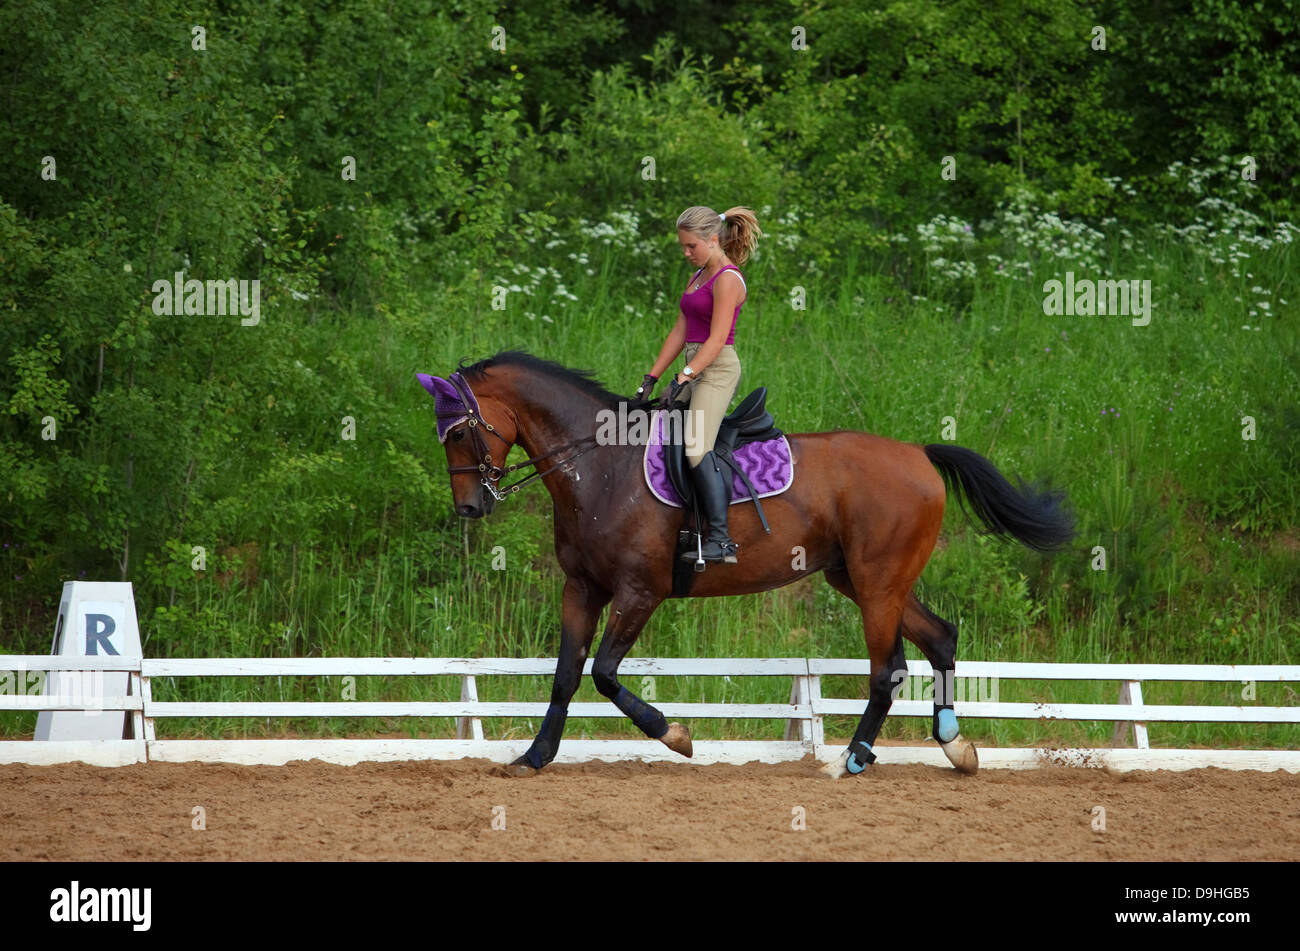 Equestrian woman riding dressage American Standardbred horse Stock Photo